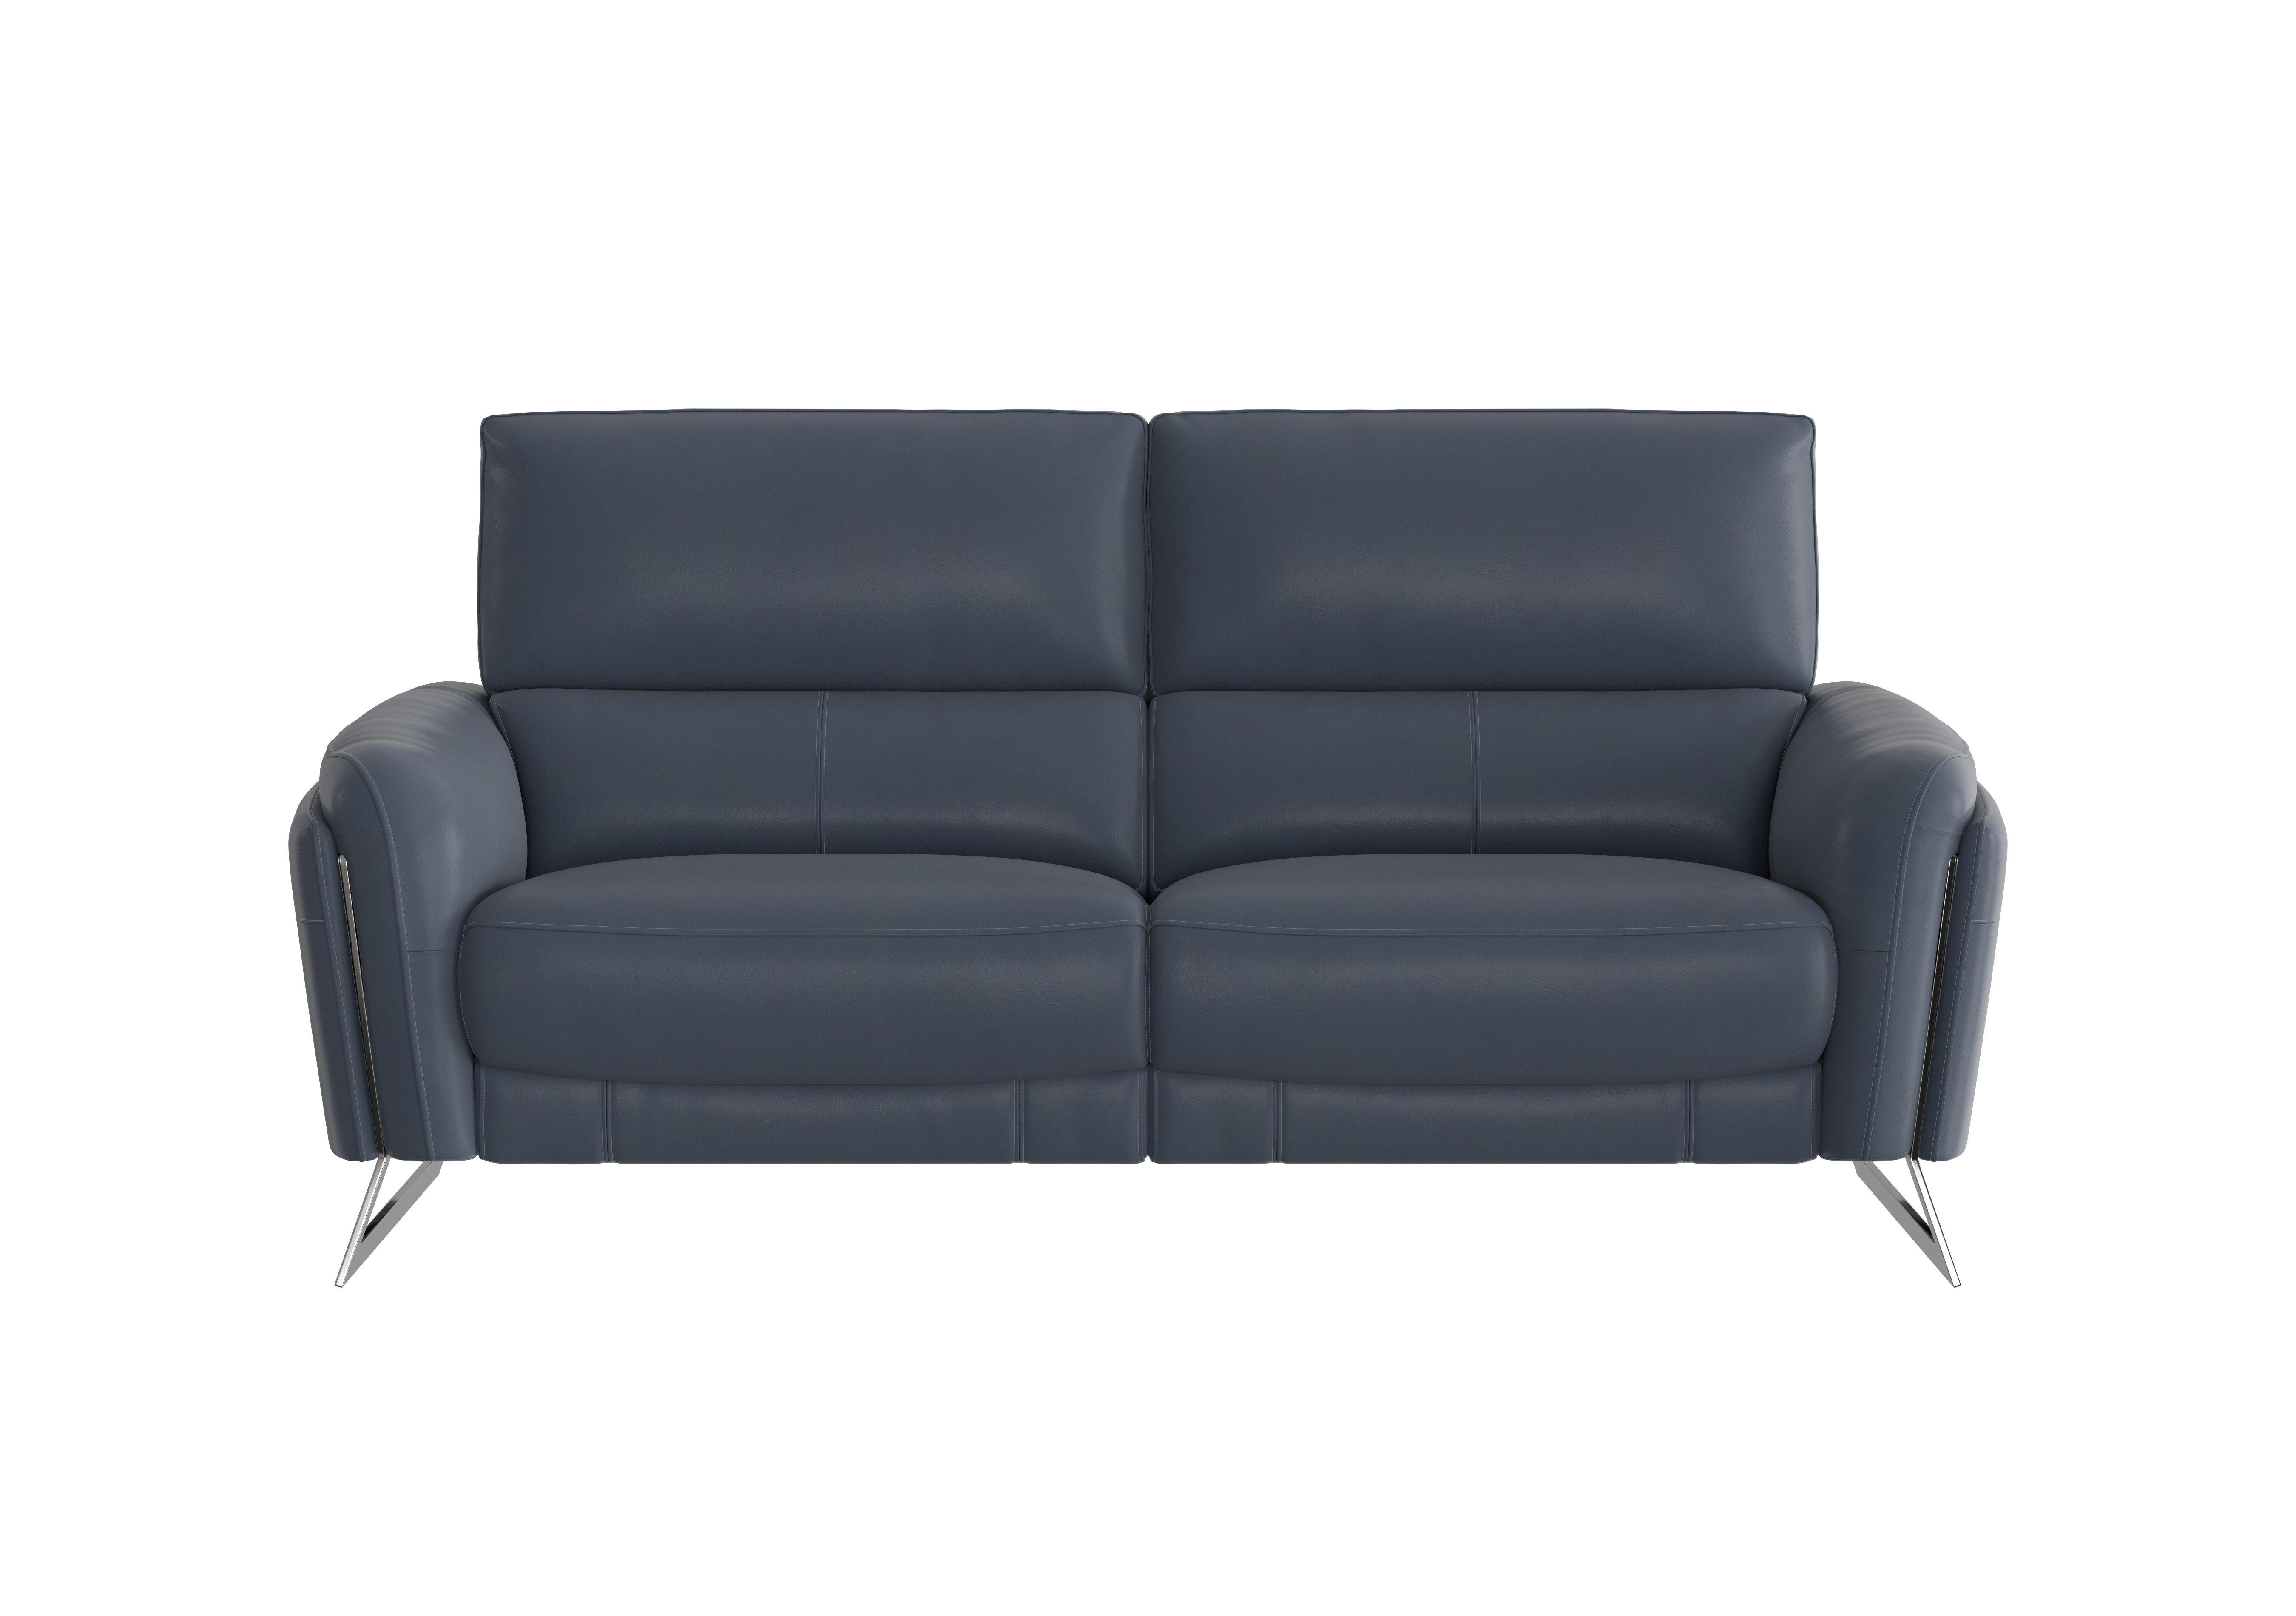 Amarilla 3 Seater Leather Sofa in Bv-313e Ocean Blue on Furniture Village